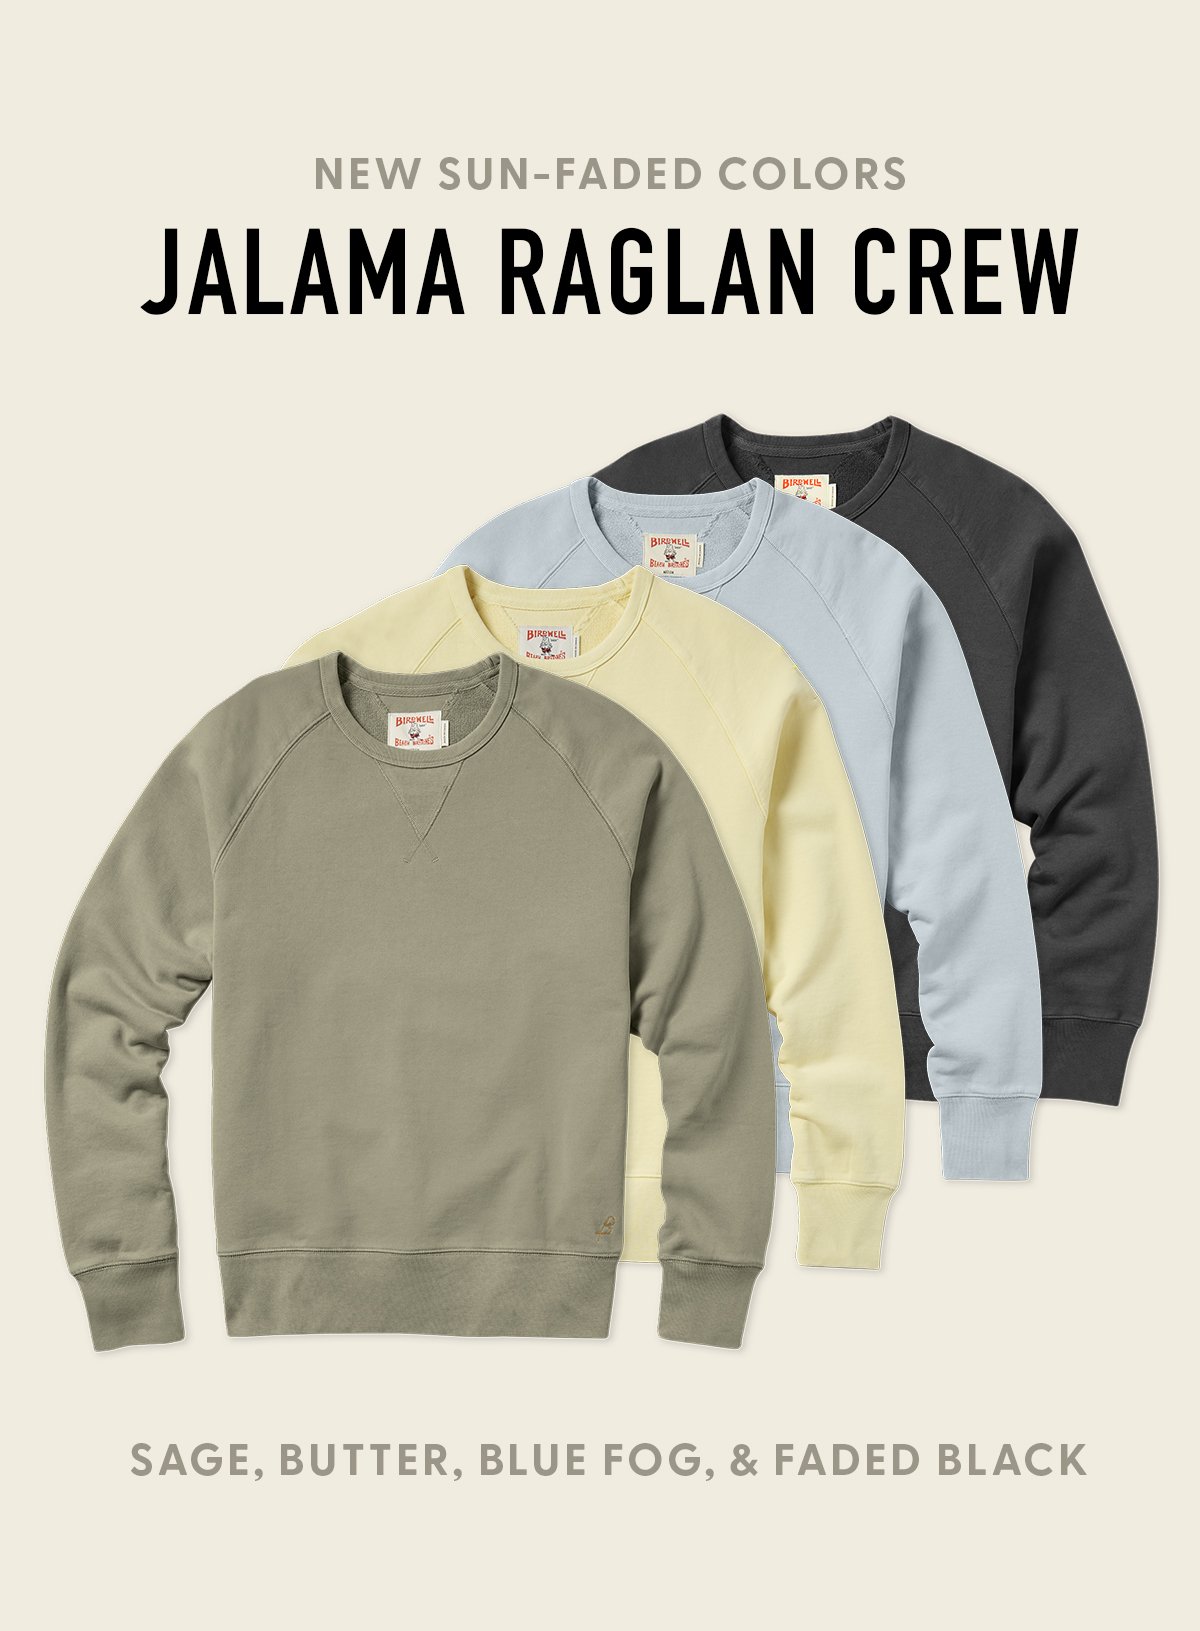 New Sun-Faded Colors - Jalama Raglan Crew